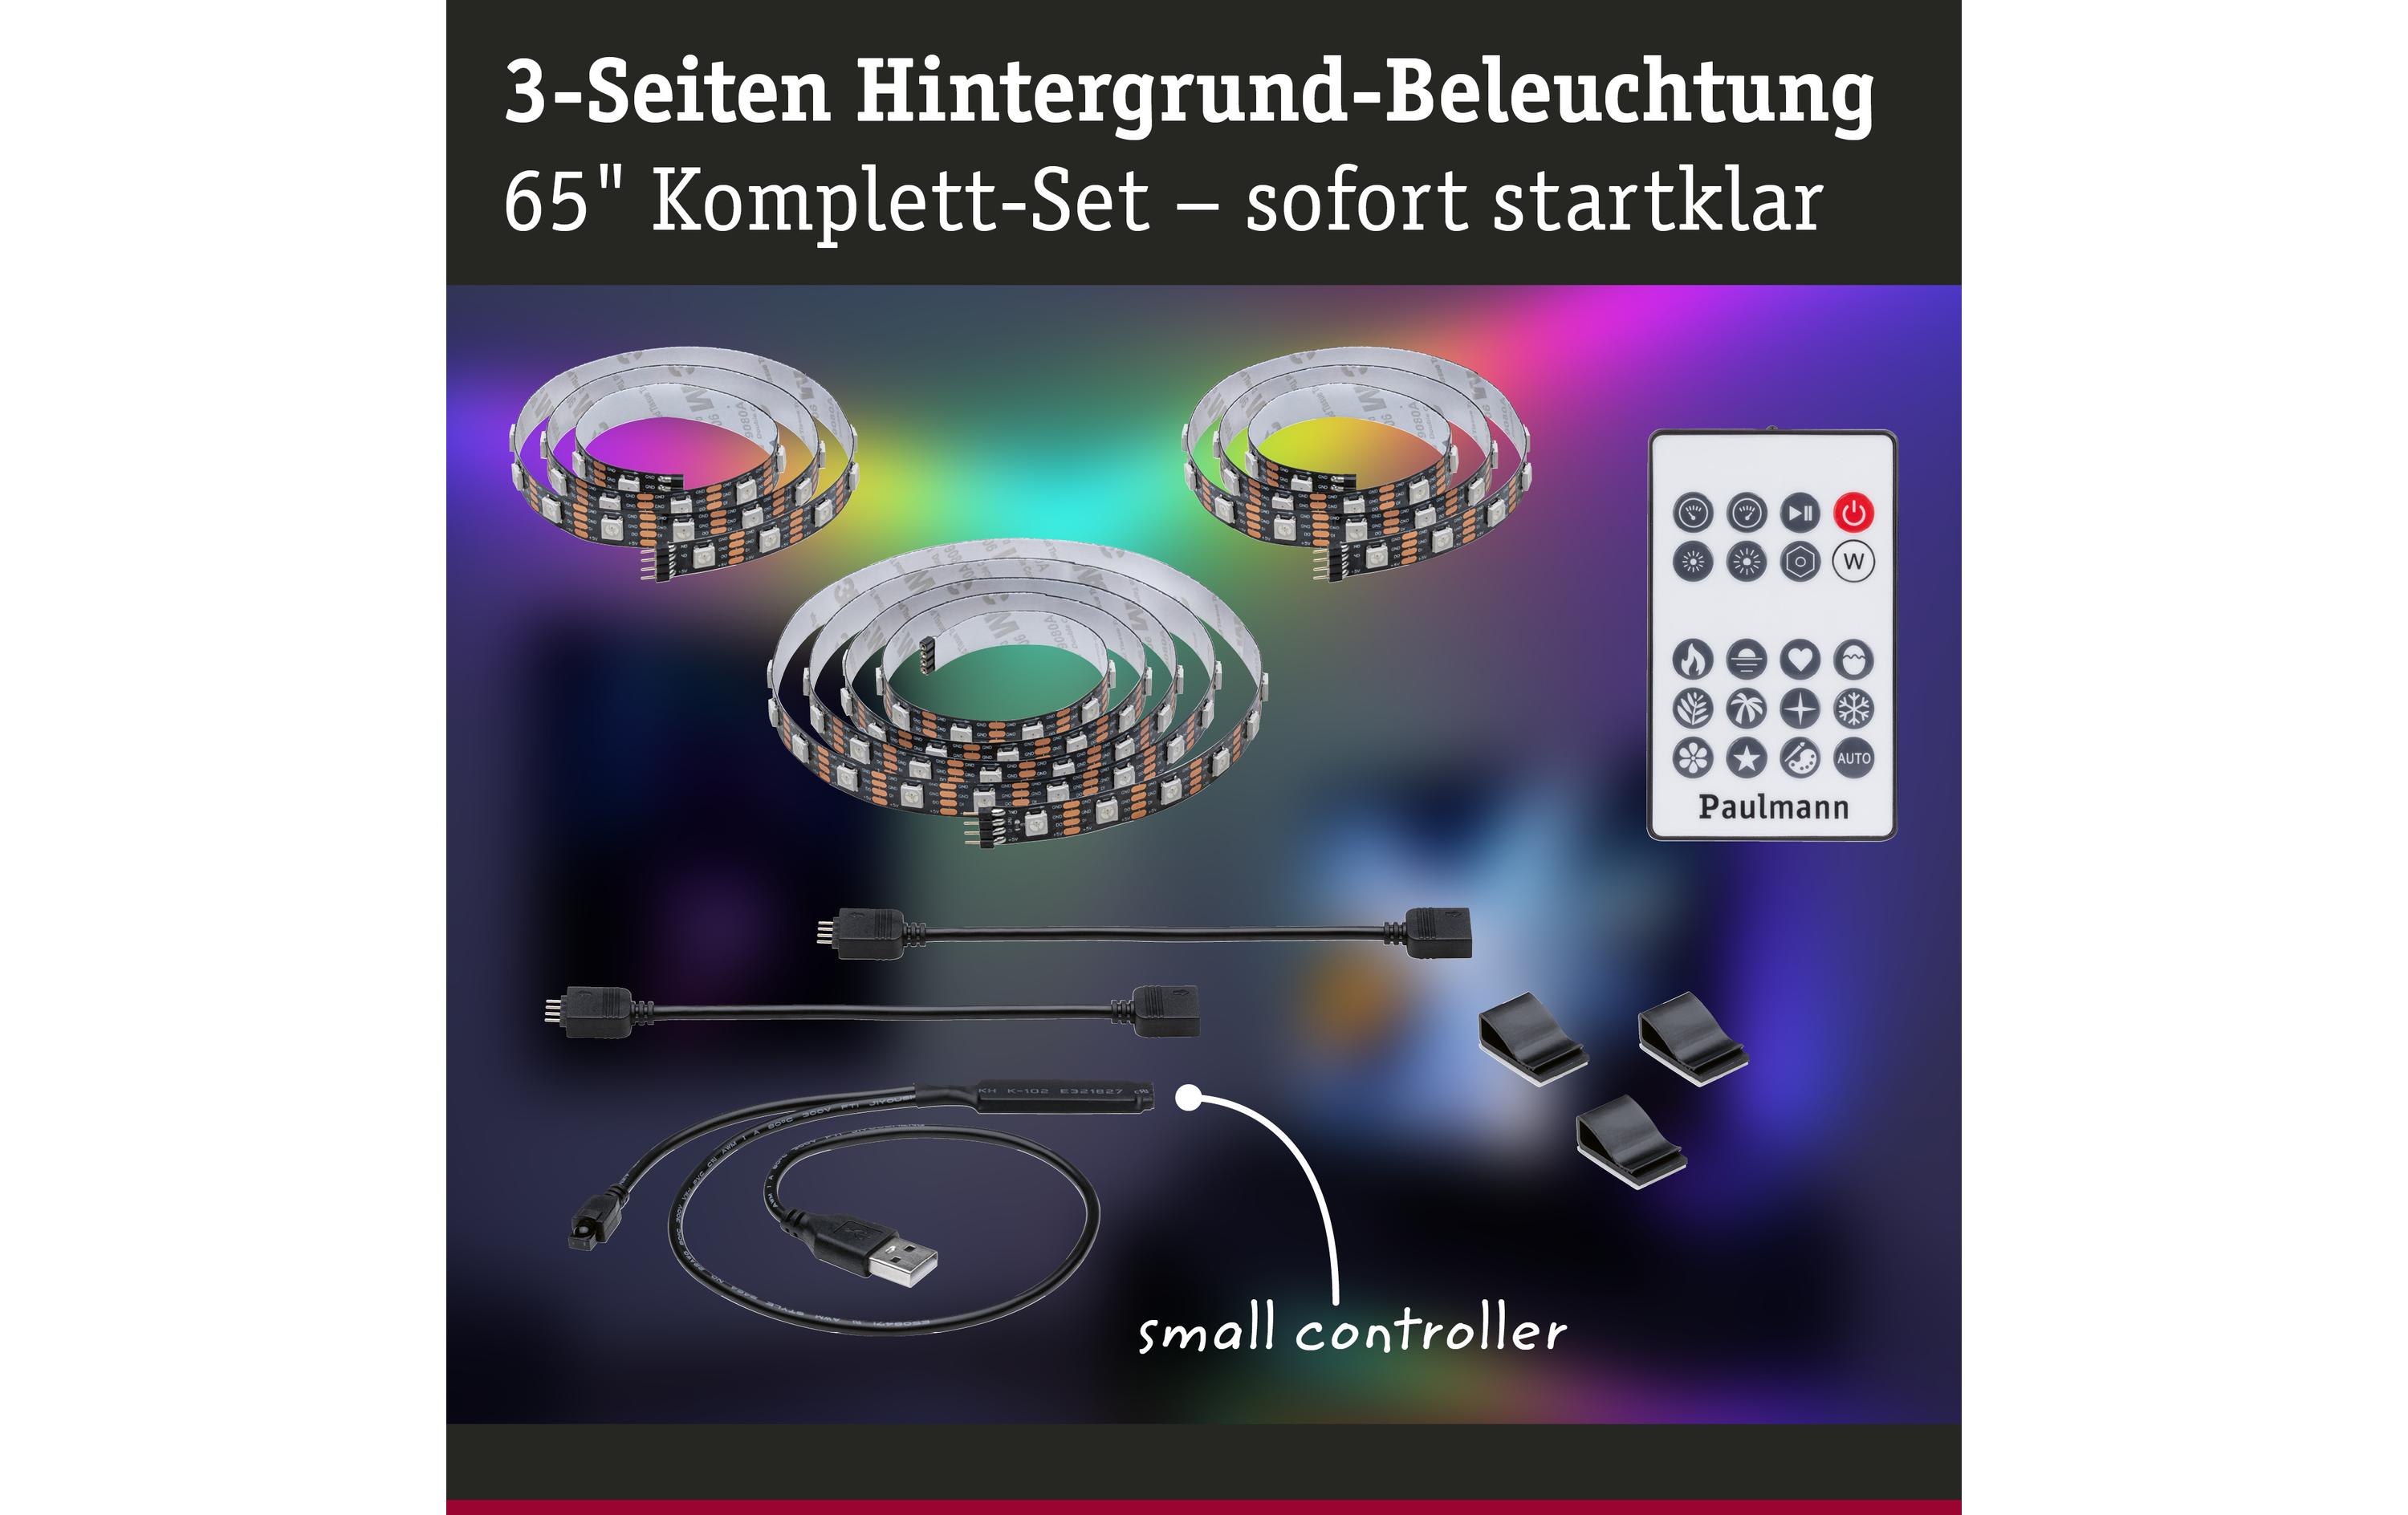 Paulmann EntertainLED USB Strip TV-Beleuchtung RGB+, 65